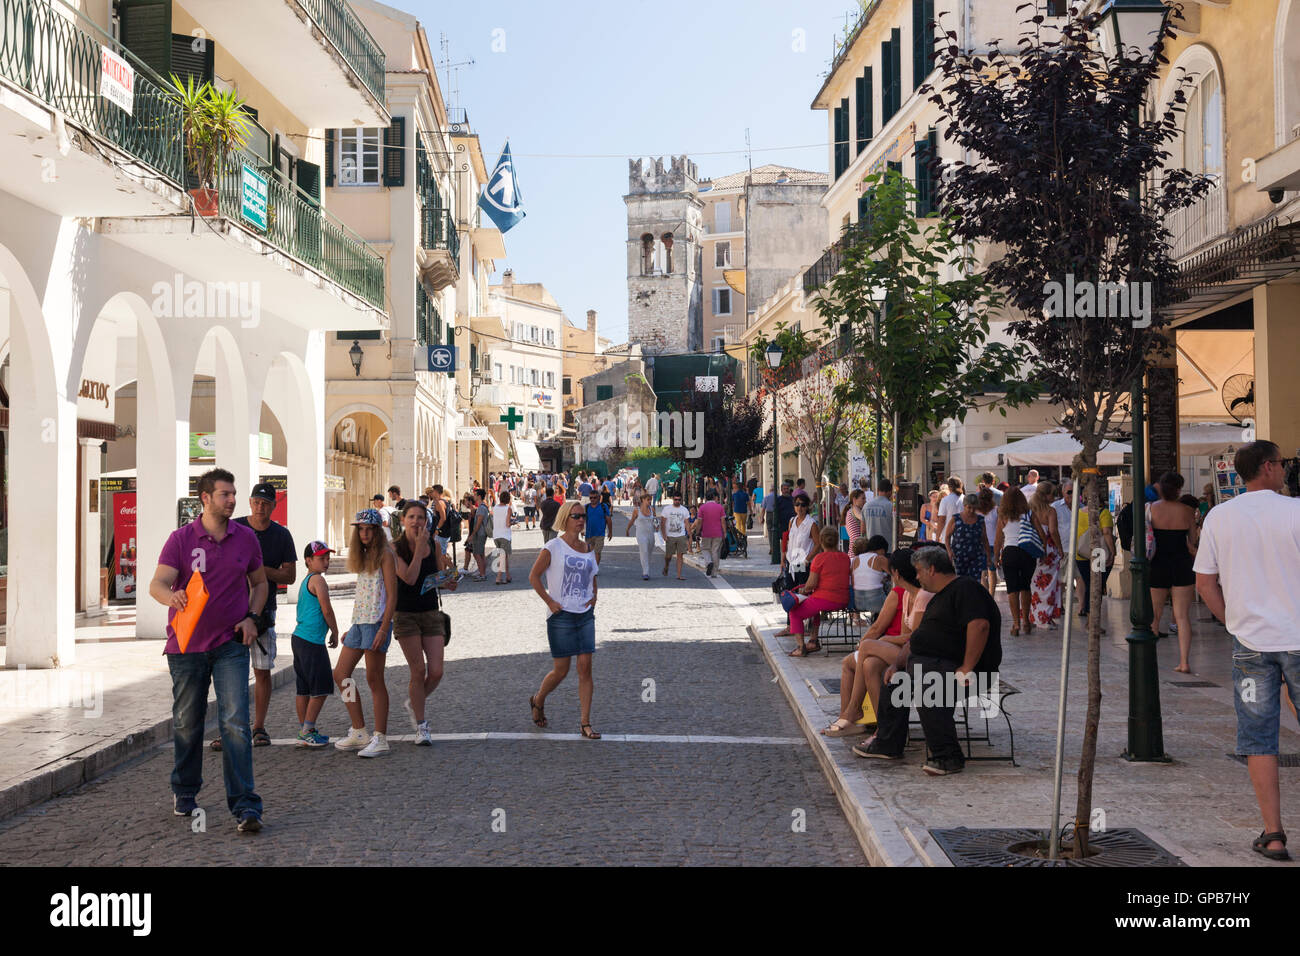 People shopping and sightseeing in Corfu old town, Corfu, Greece Stock Photo